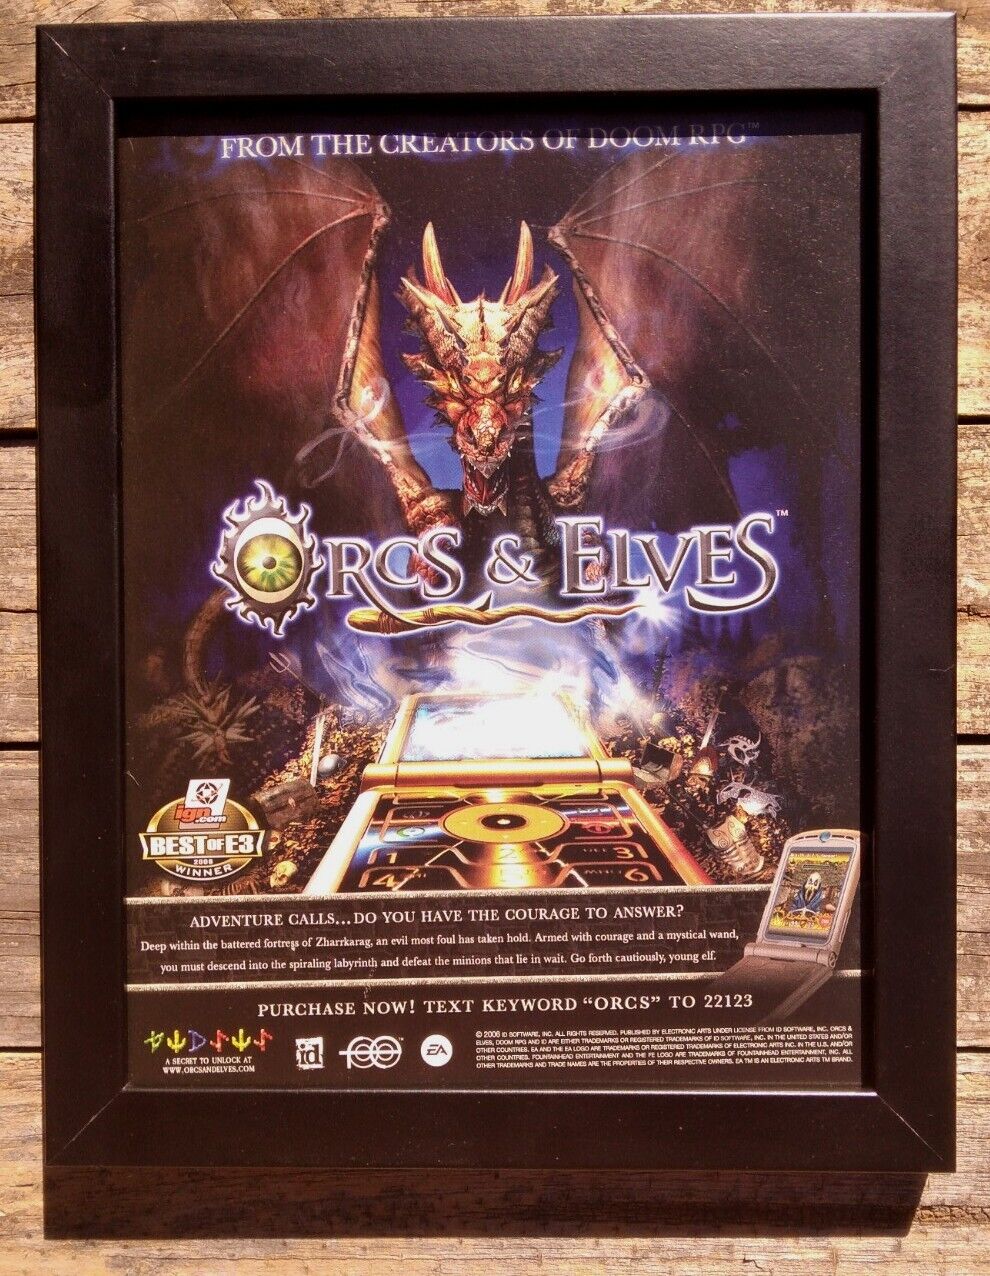 2006 Orcs & Elves RPG Dragon Mobile Phone Video Game Art Framed Print Ad Poster 